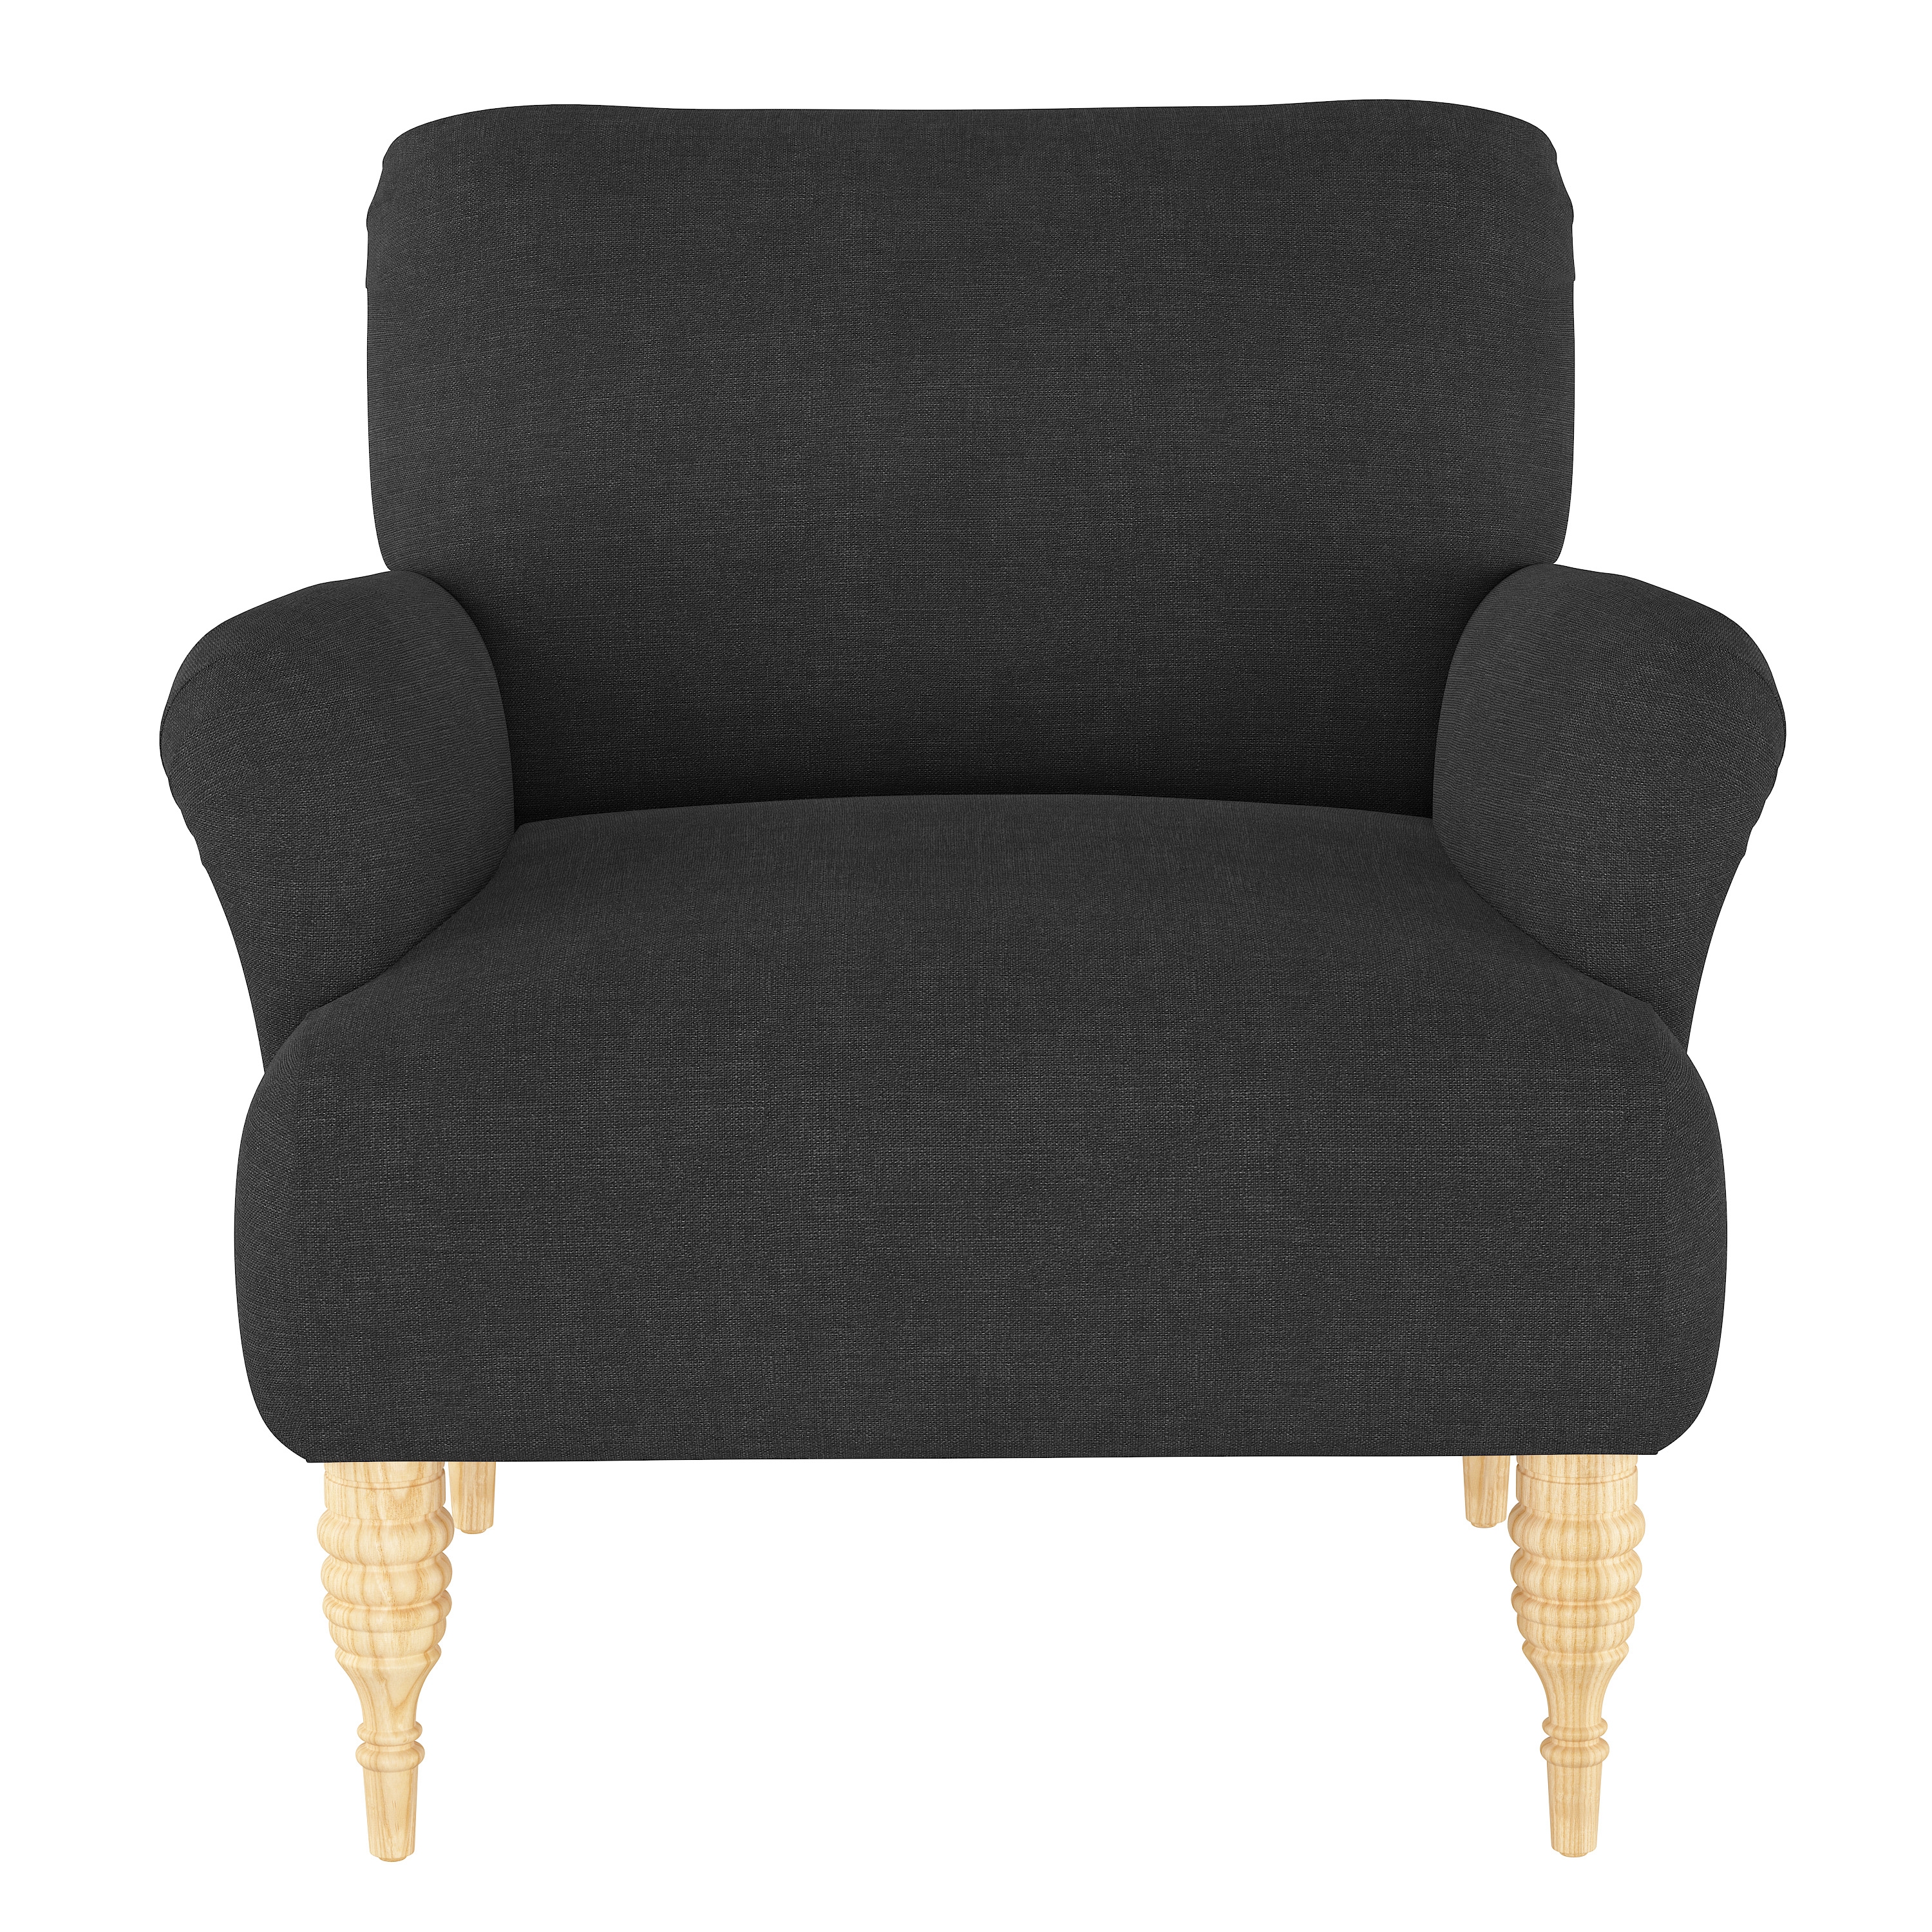 Merrill Chair, Caviar - Image 1